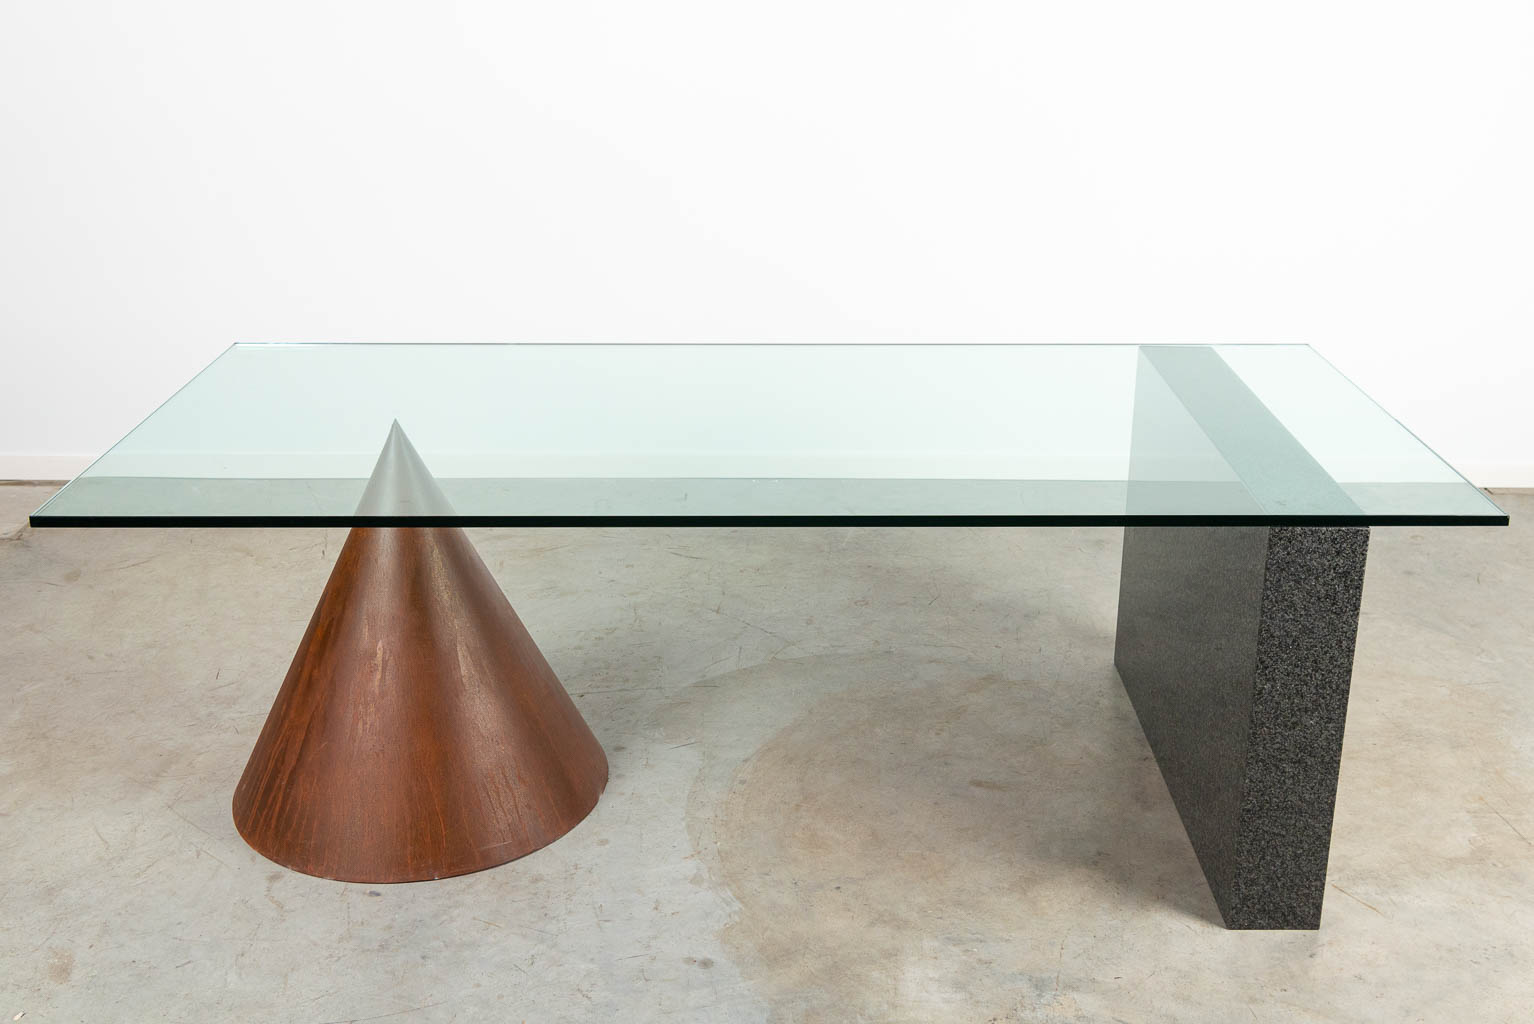 Lella & Massimo VIGNELLI (XX-XXI) Kono dining room table, 1984. 